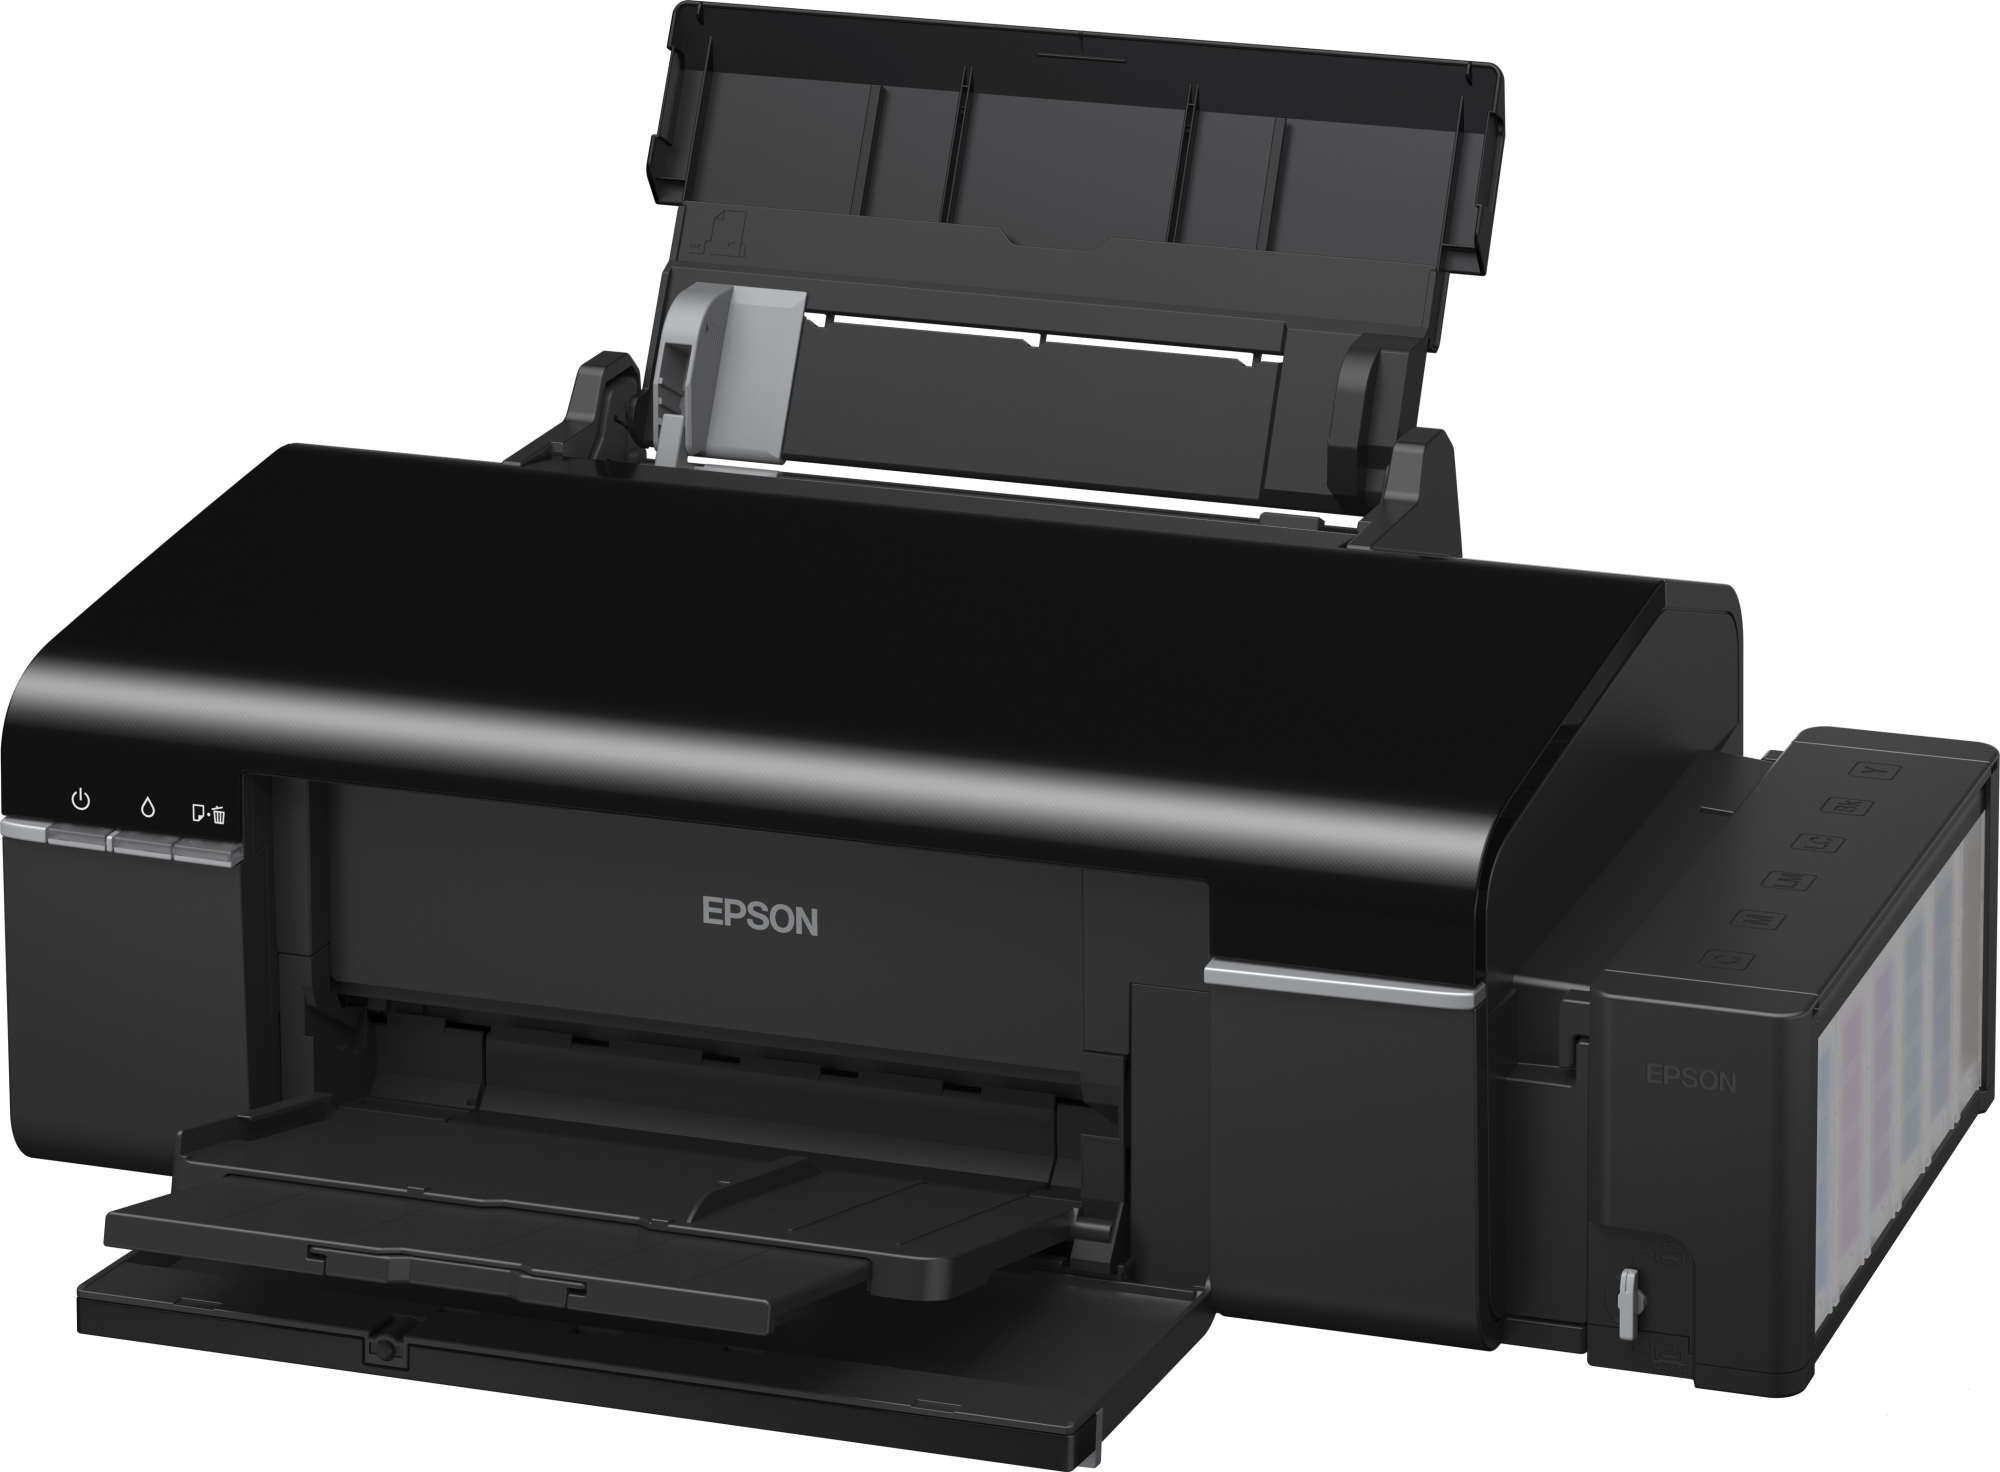 Купить принтер в оренбурге. Epson l800. Принтер Эпсон l800. Принтер Эпсон 805. Струйный принтер Epson l800.